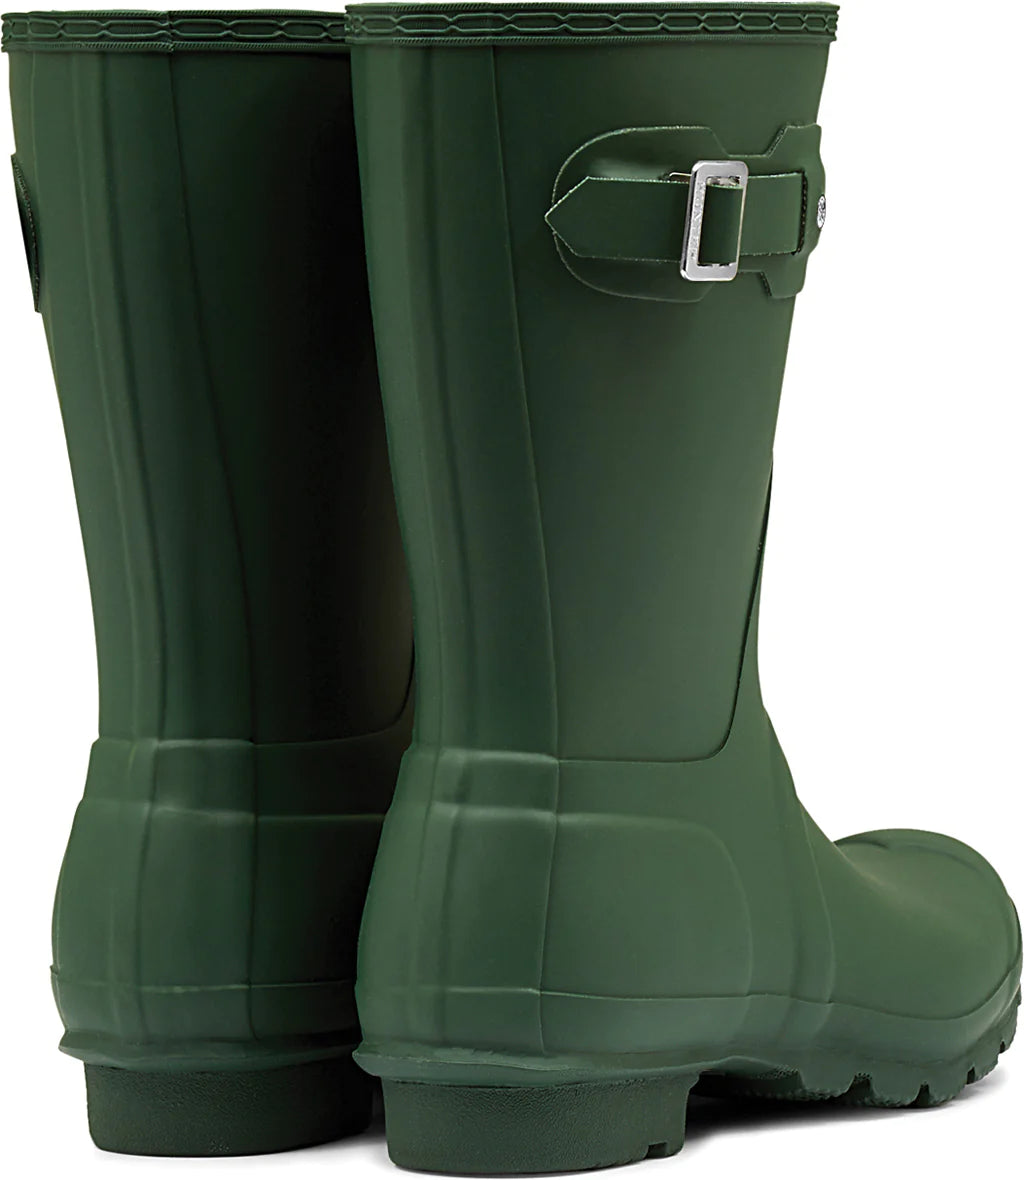 HUNTER Original Short Rain Boots - Green (US 6)